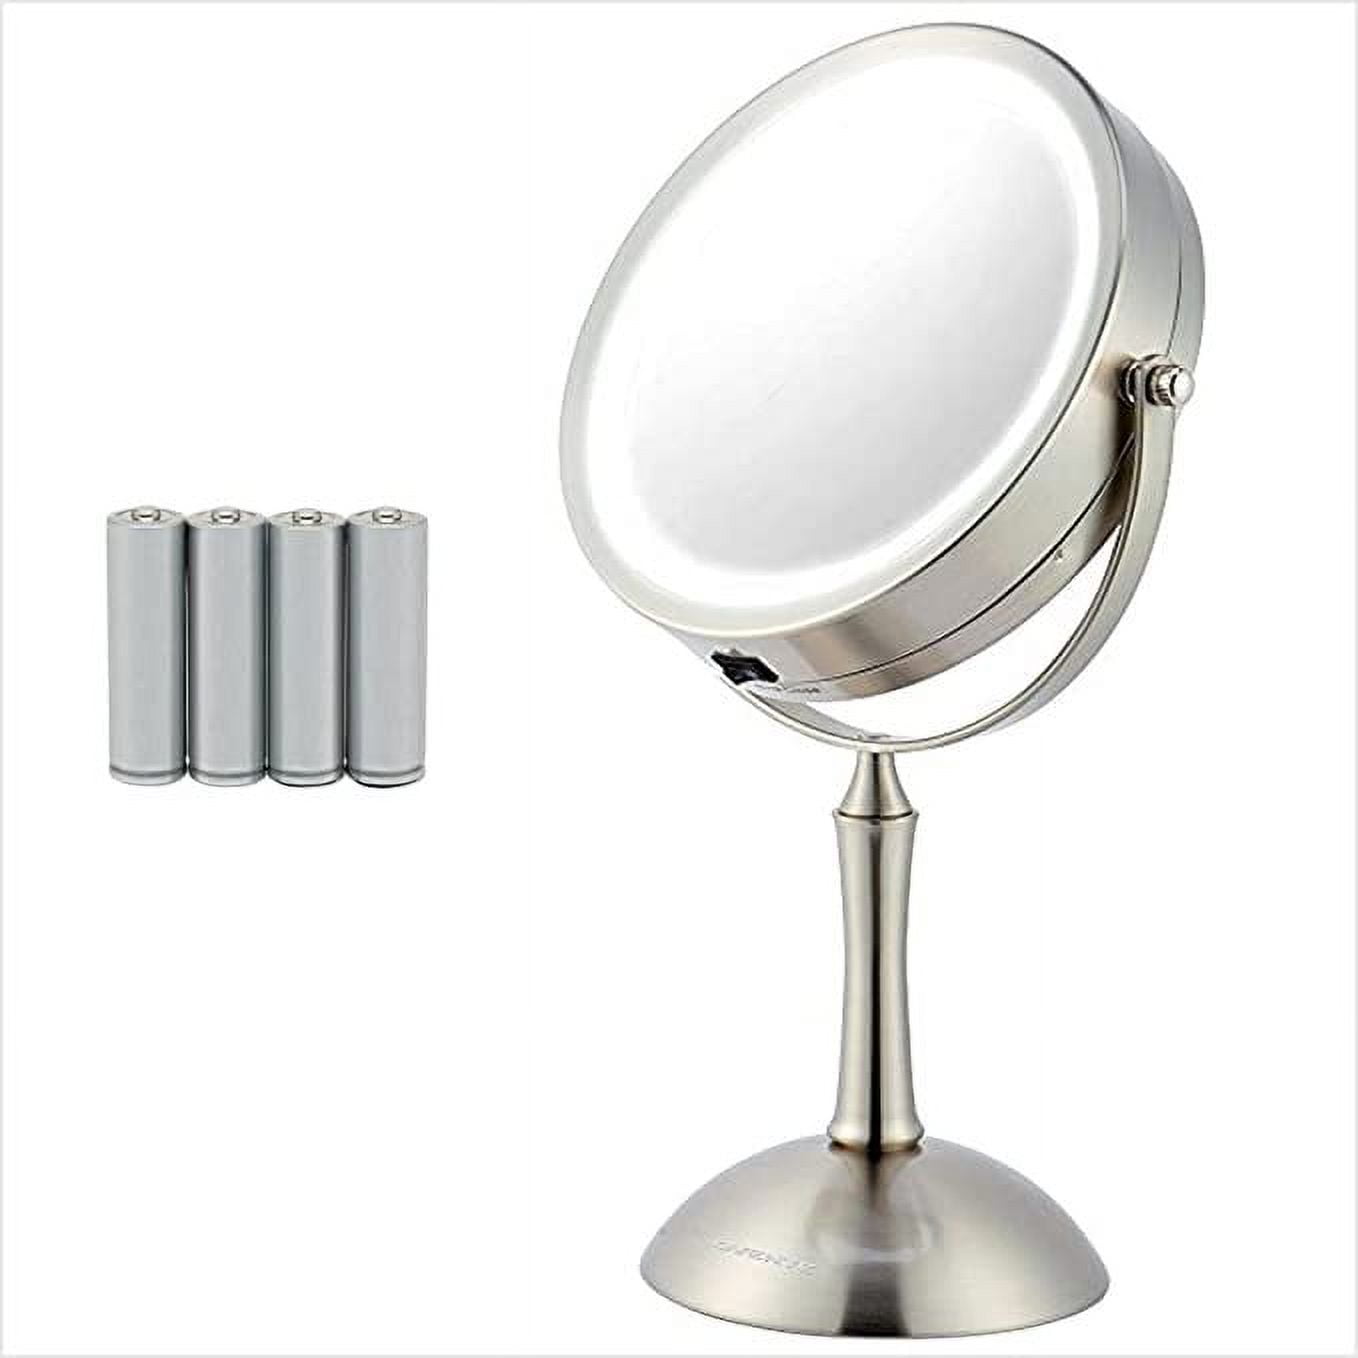 Light up LED ring light mirror - furniture - by owner - sale - craigslist